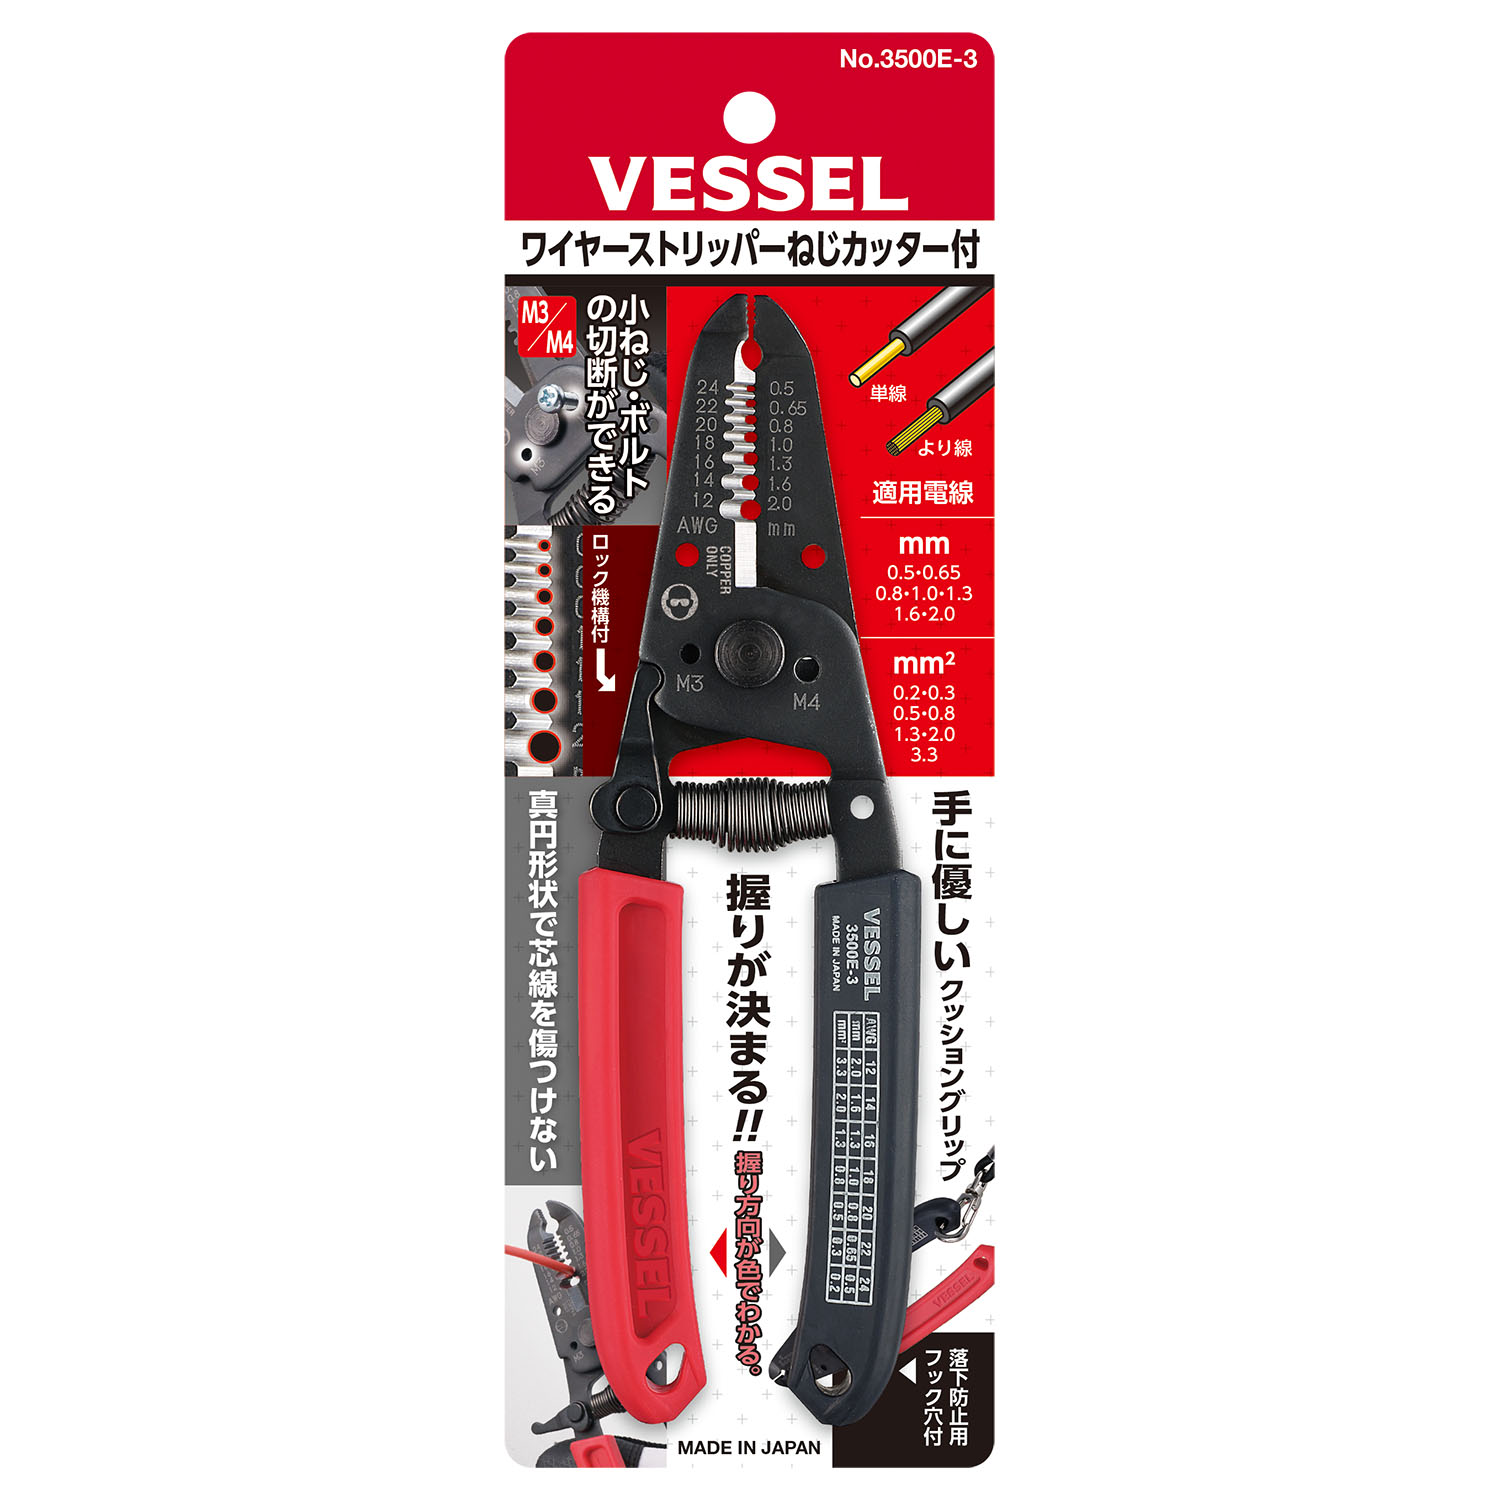 VESSEL JAPAN 300005 Wire Stripper 3000C C type crimping tool molex japan ｗ/Track 